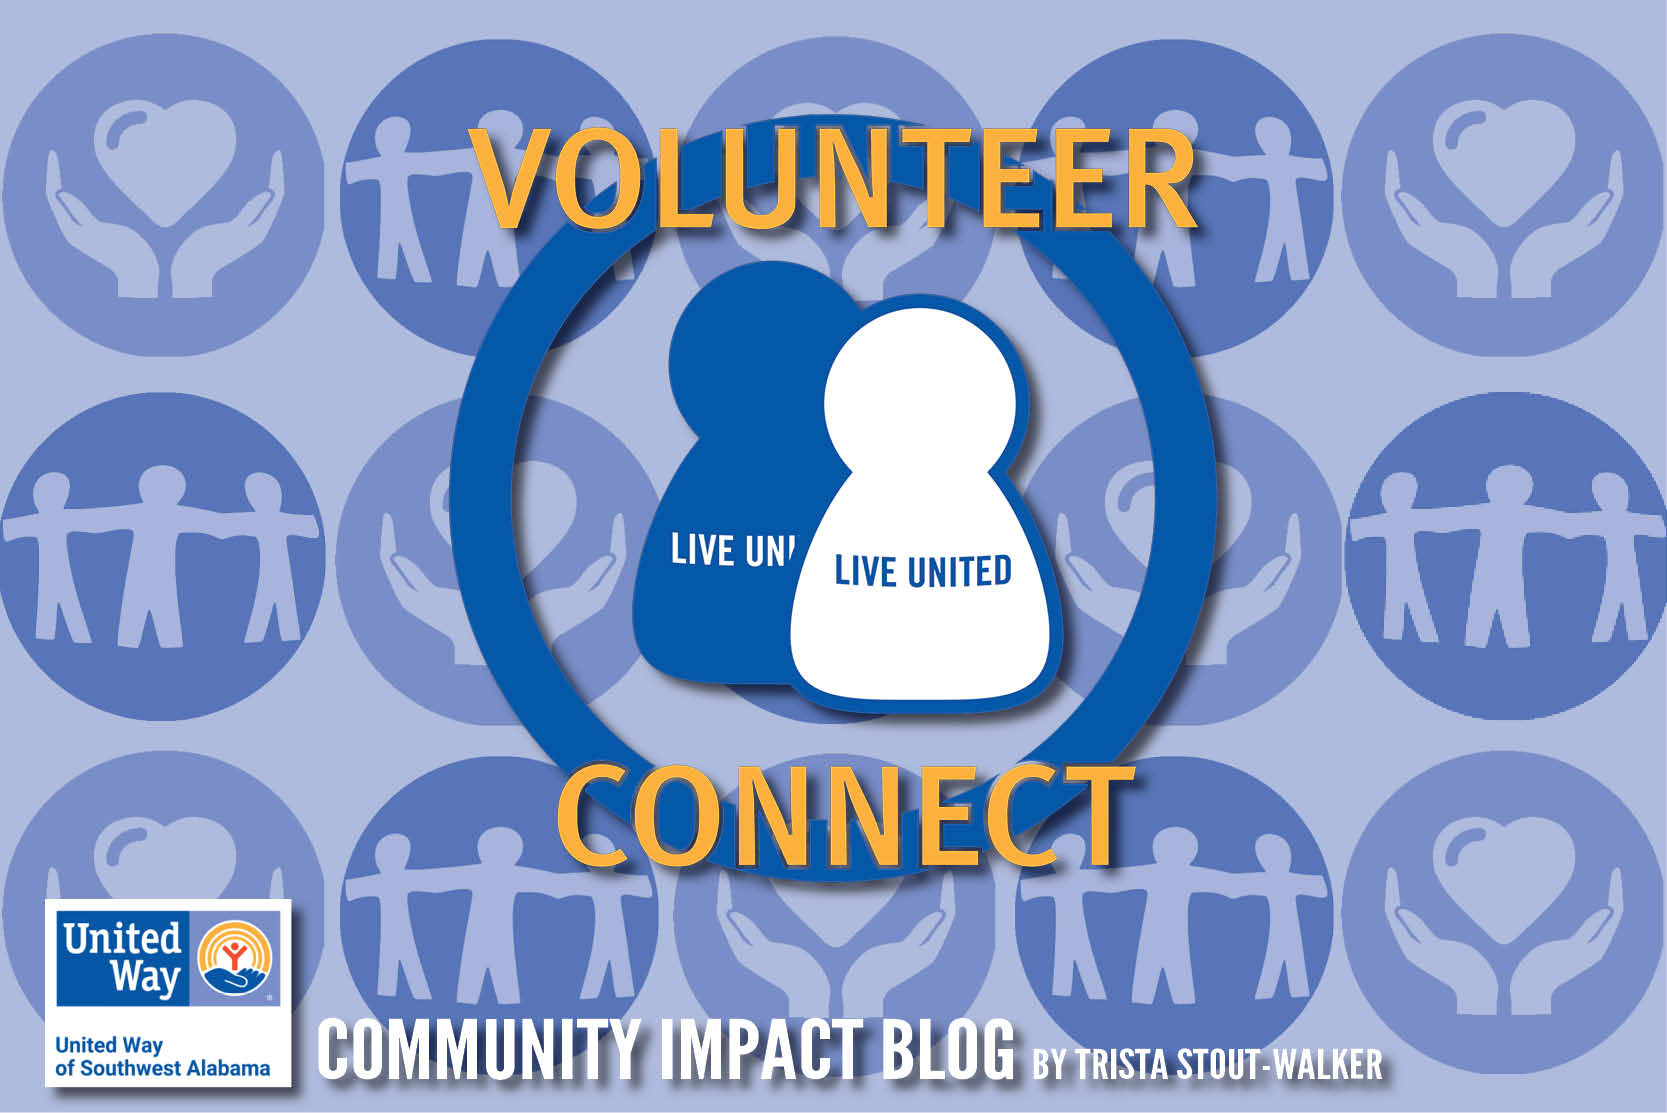 April Community Impact Blog: Volunteer Connect by Trista Stout-Walker